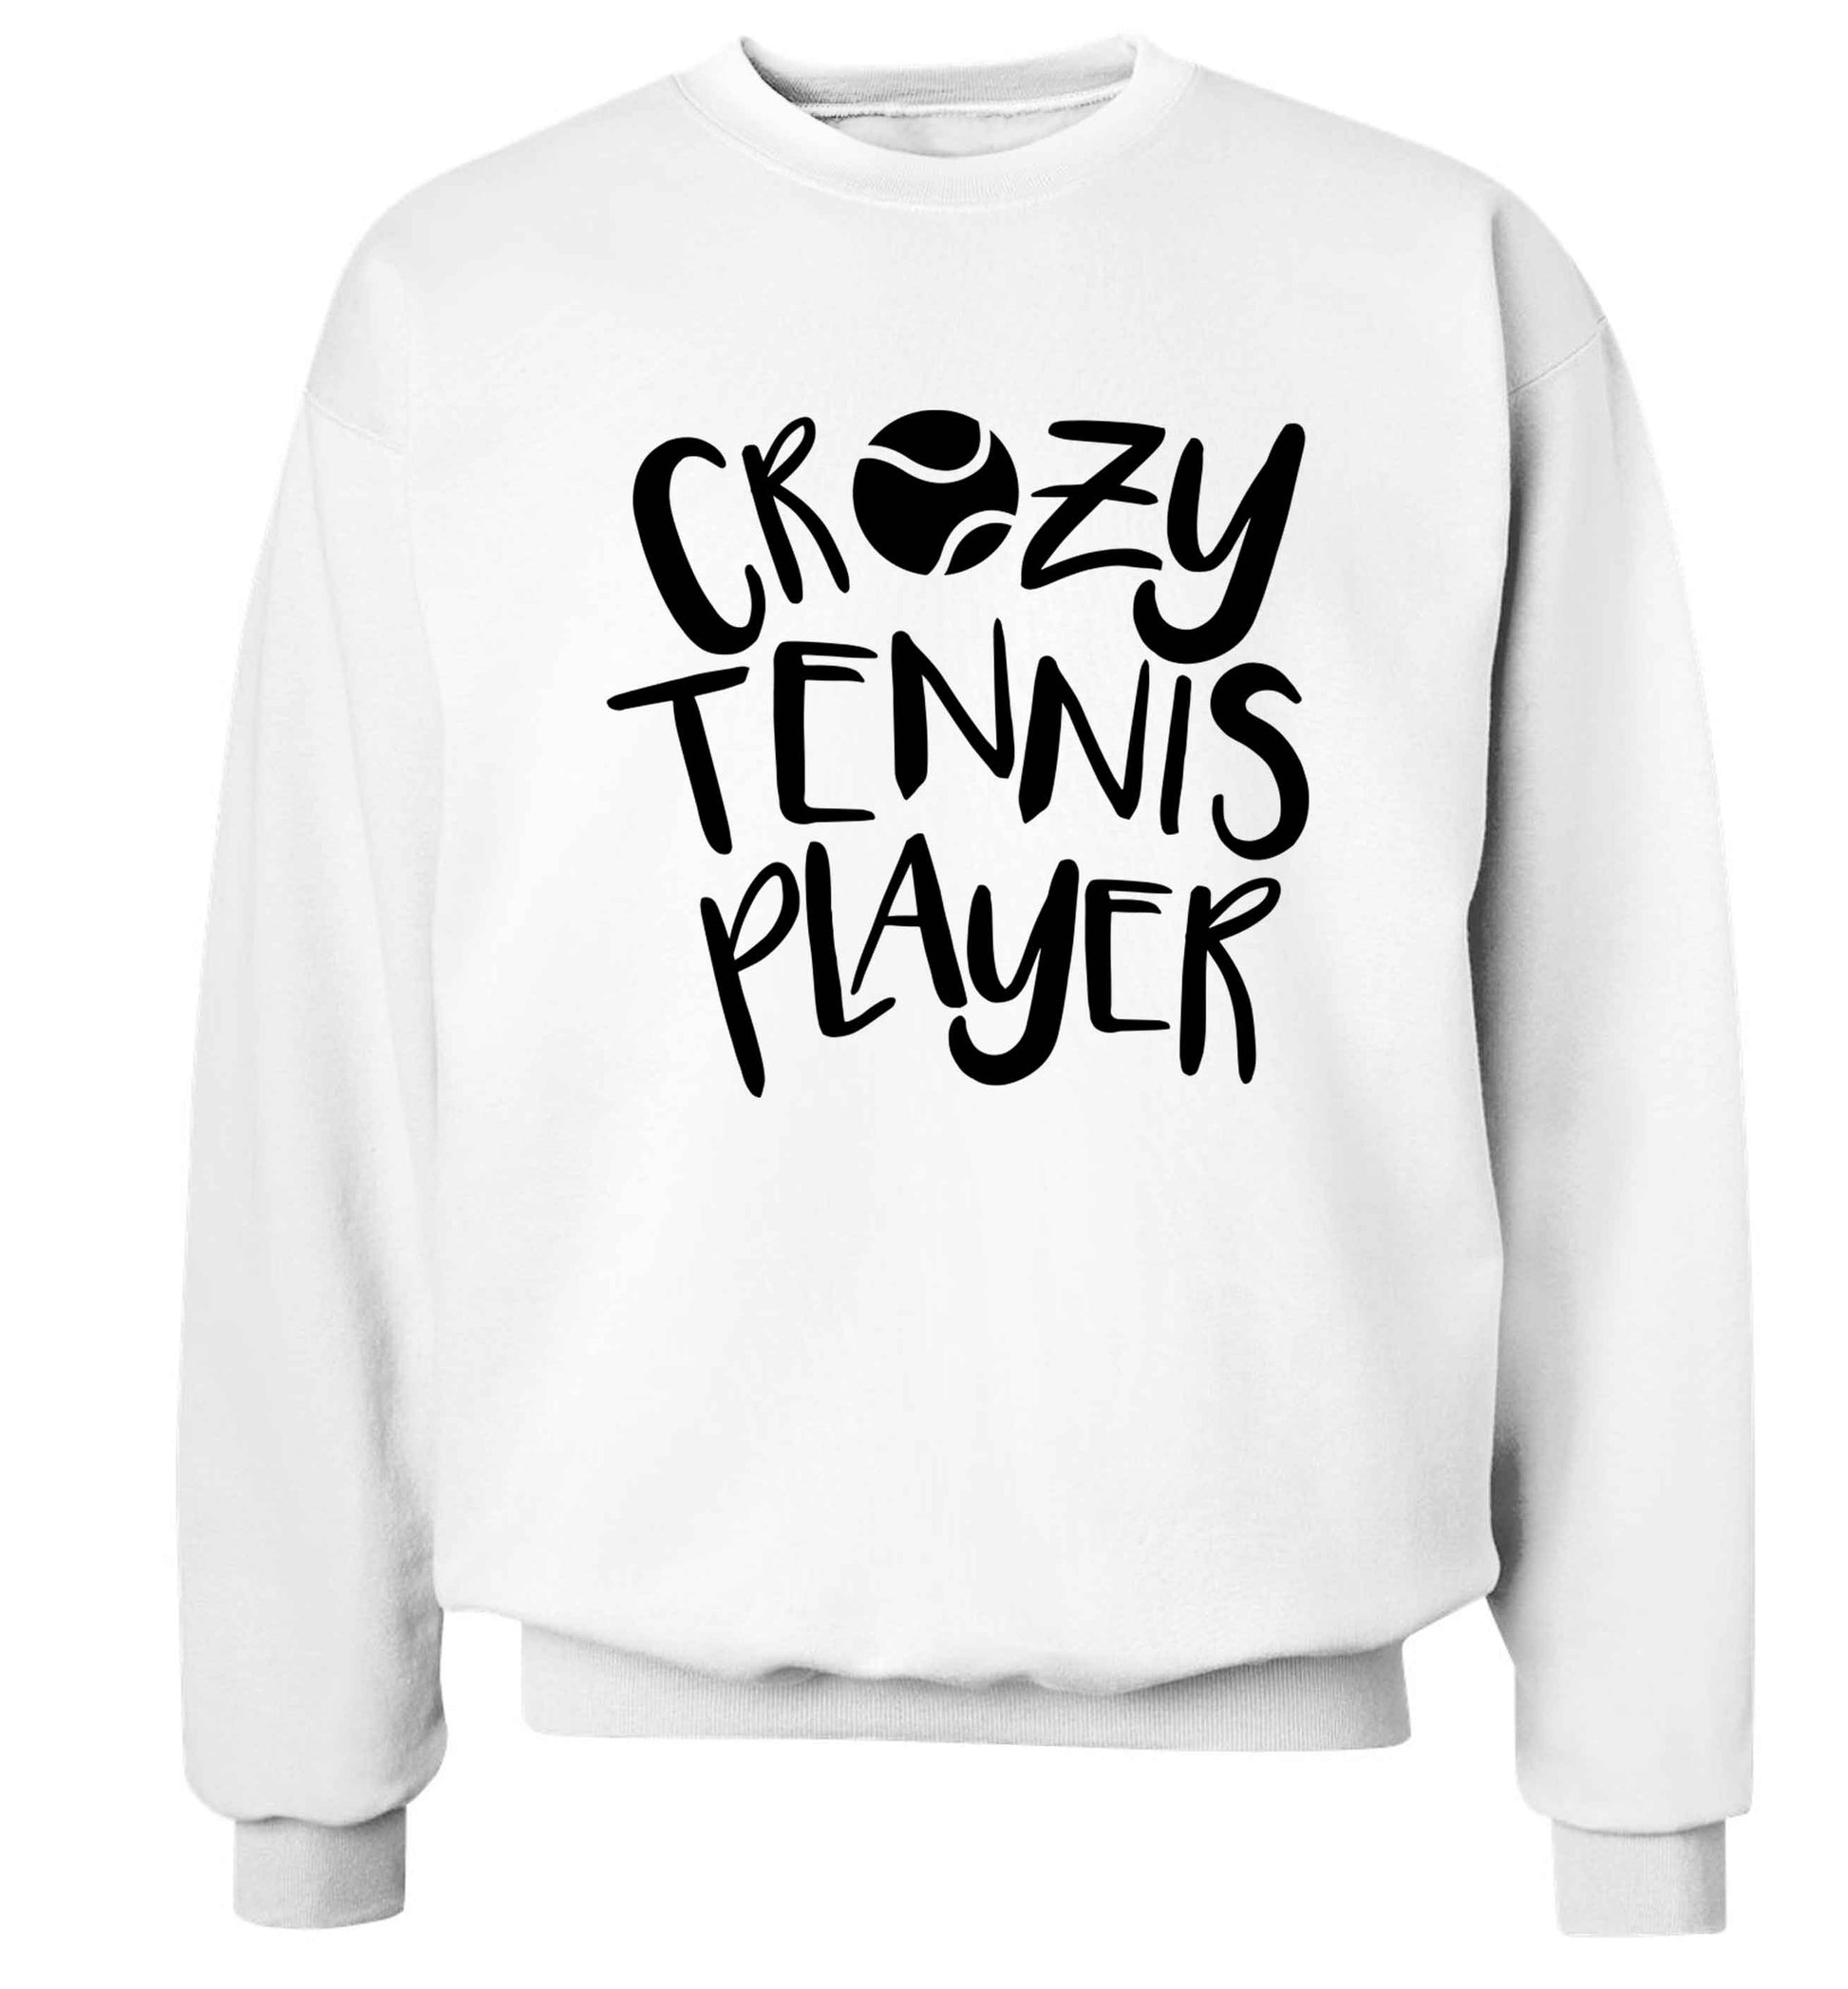 Crazy tennis player Adult's unisex white Sweater 2XL